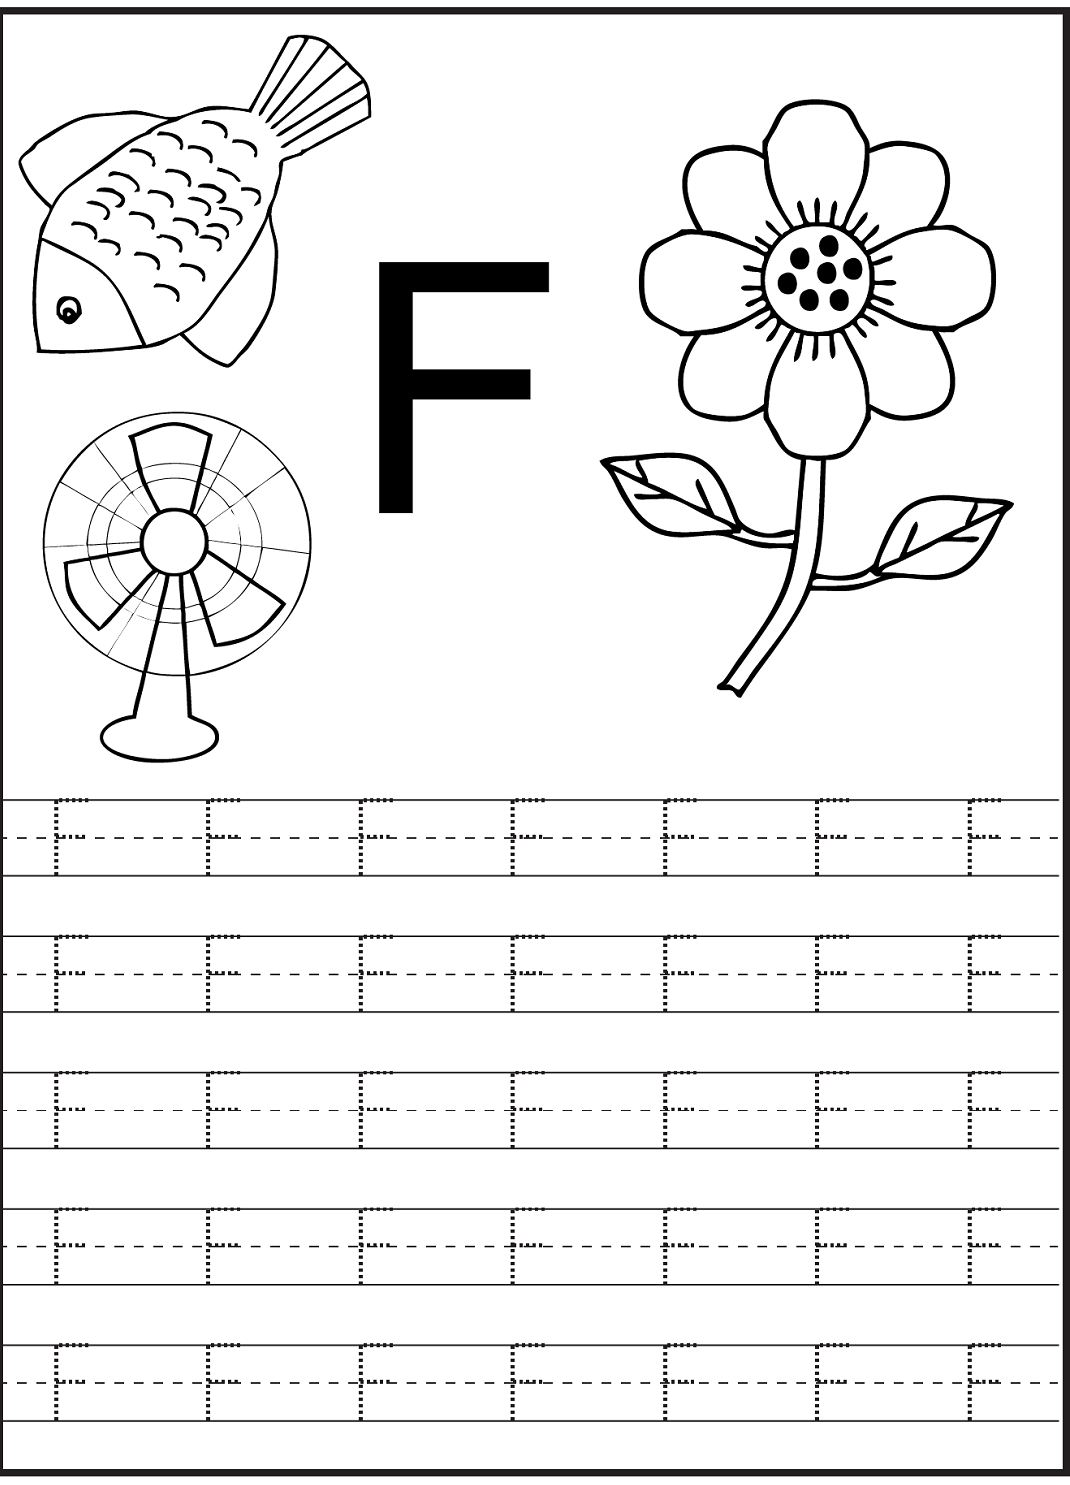 Letter F Worksheet For Preschool And Kindergarten | Alphabet intended for Letter F Worksheets Free Printable